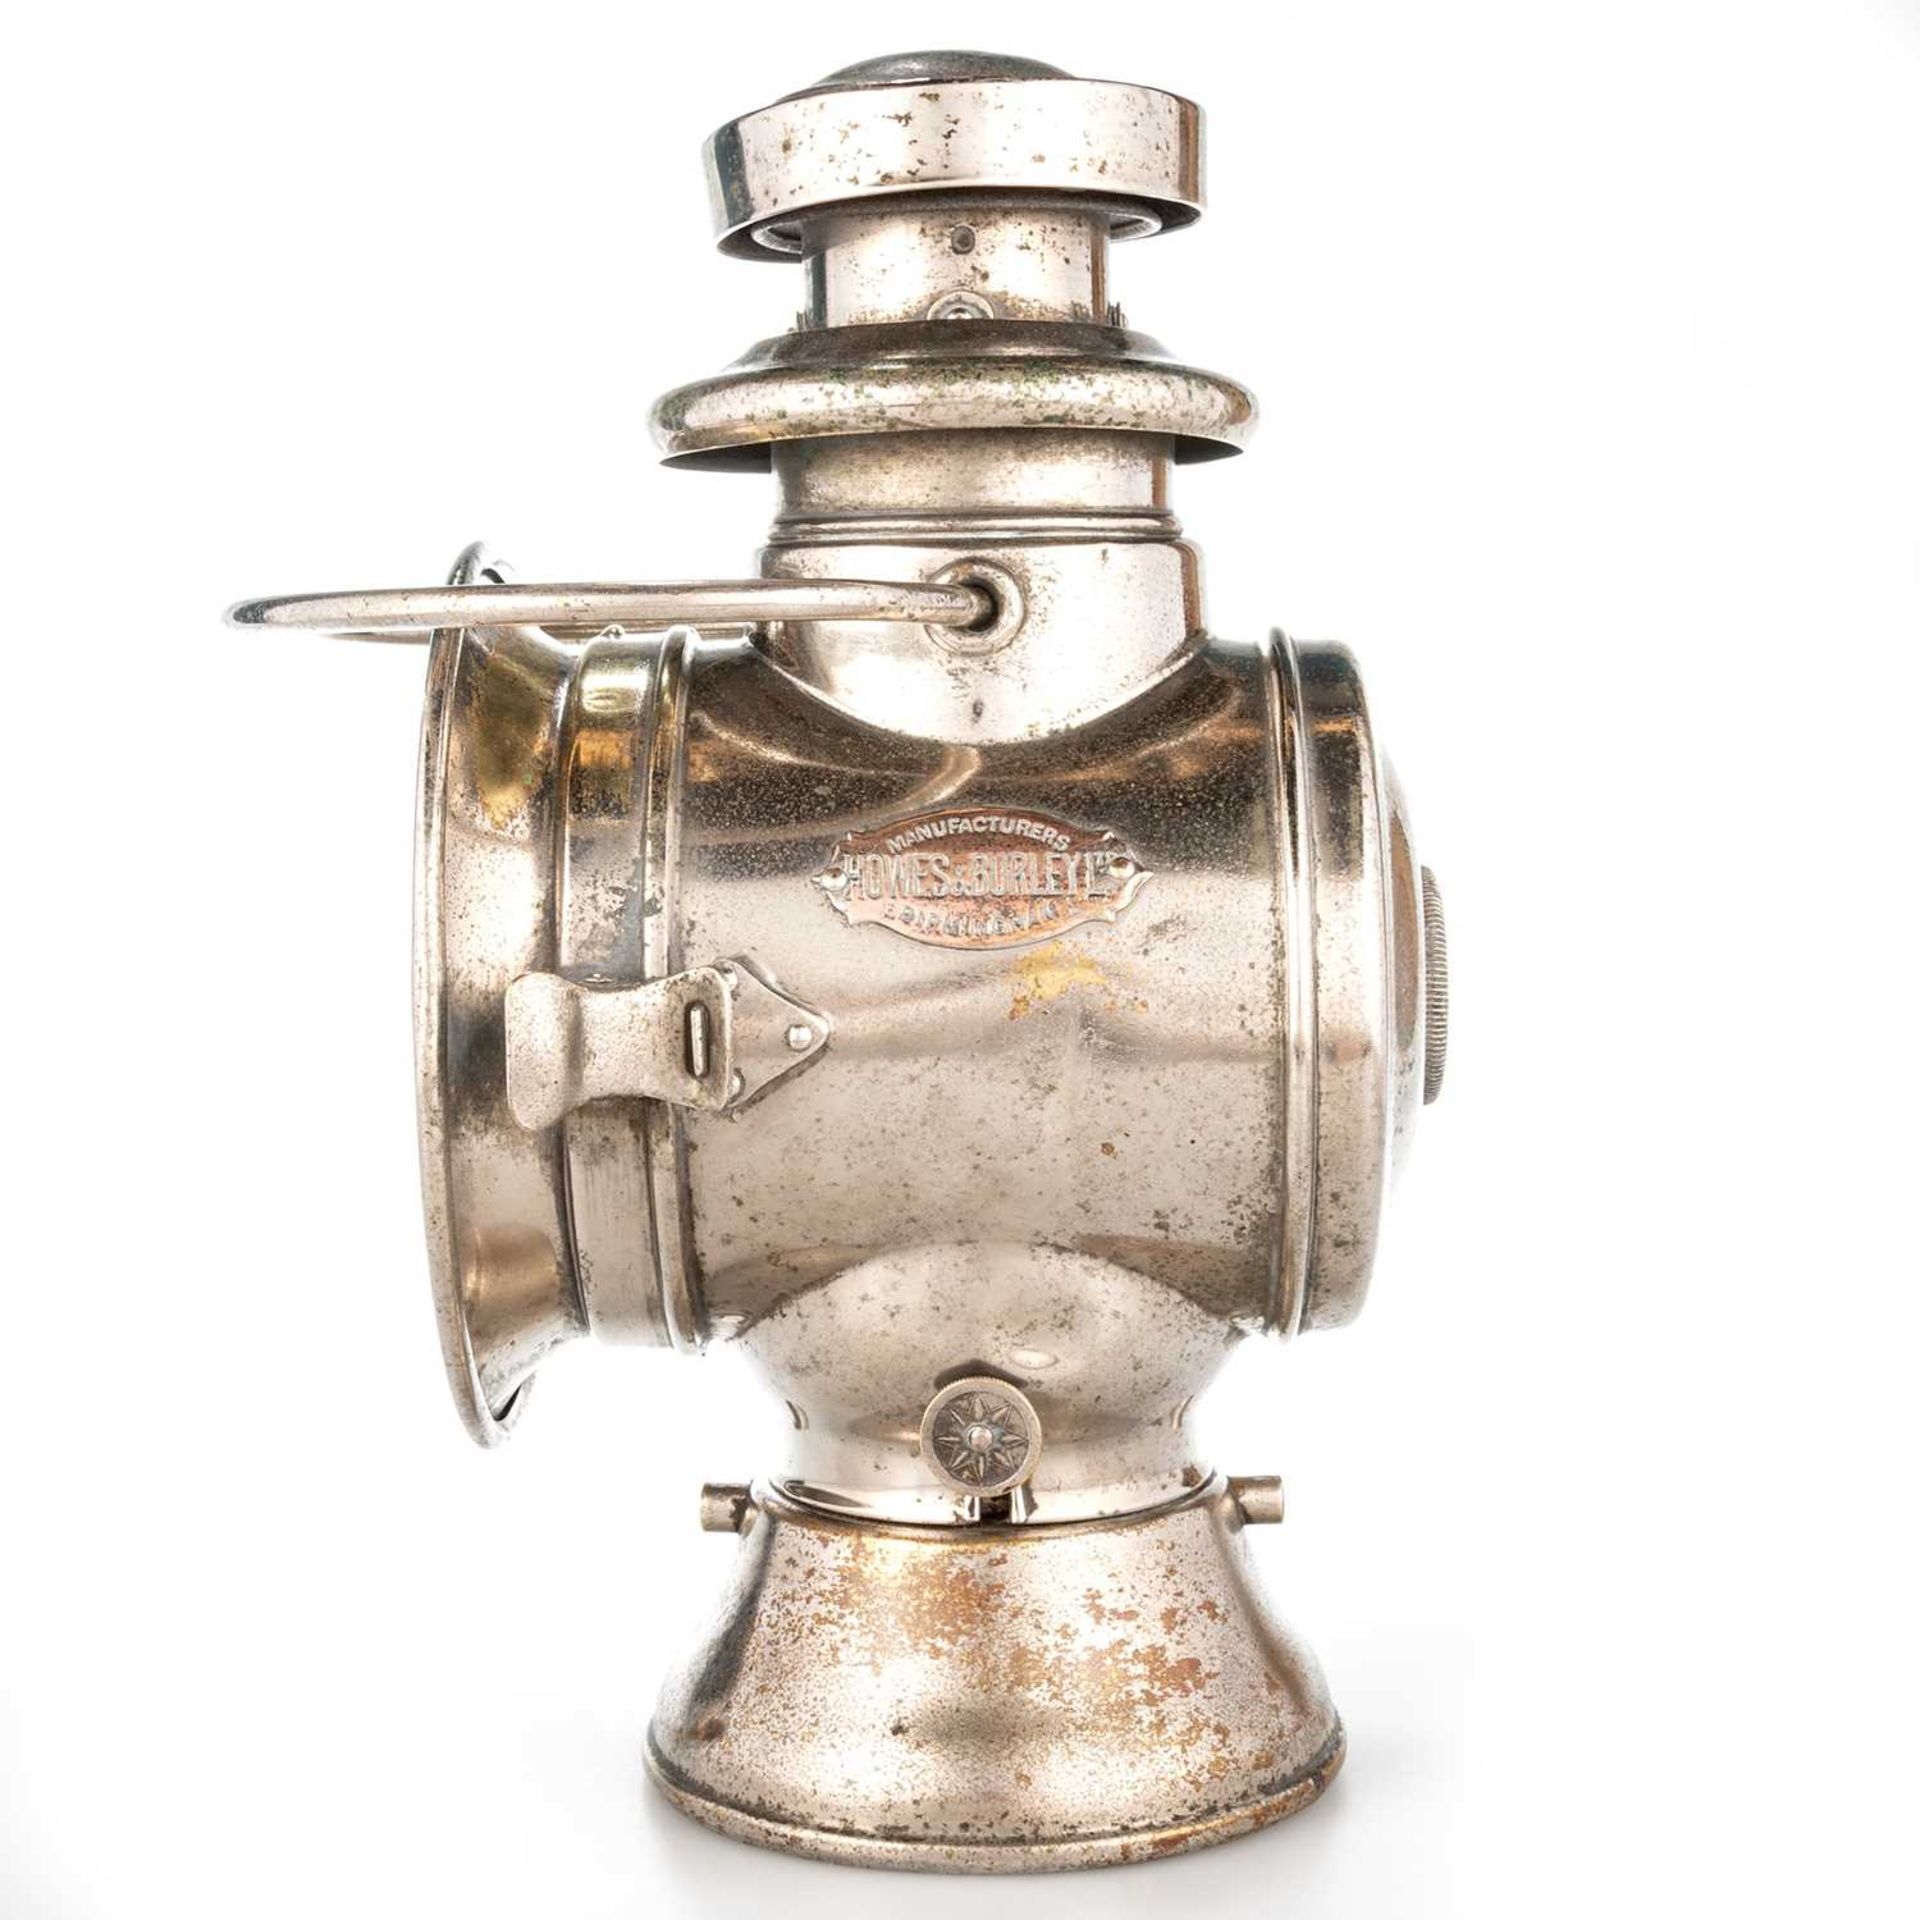 A HOWES & BURLEY LTD CHROMED OIL SIDE LAMP - Image 2 of 4